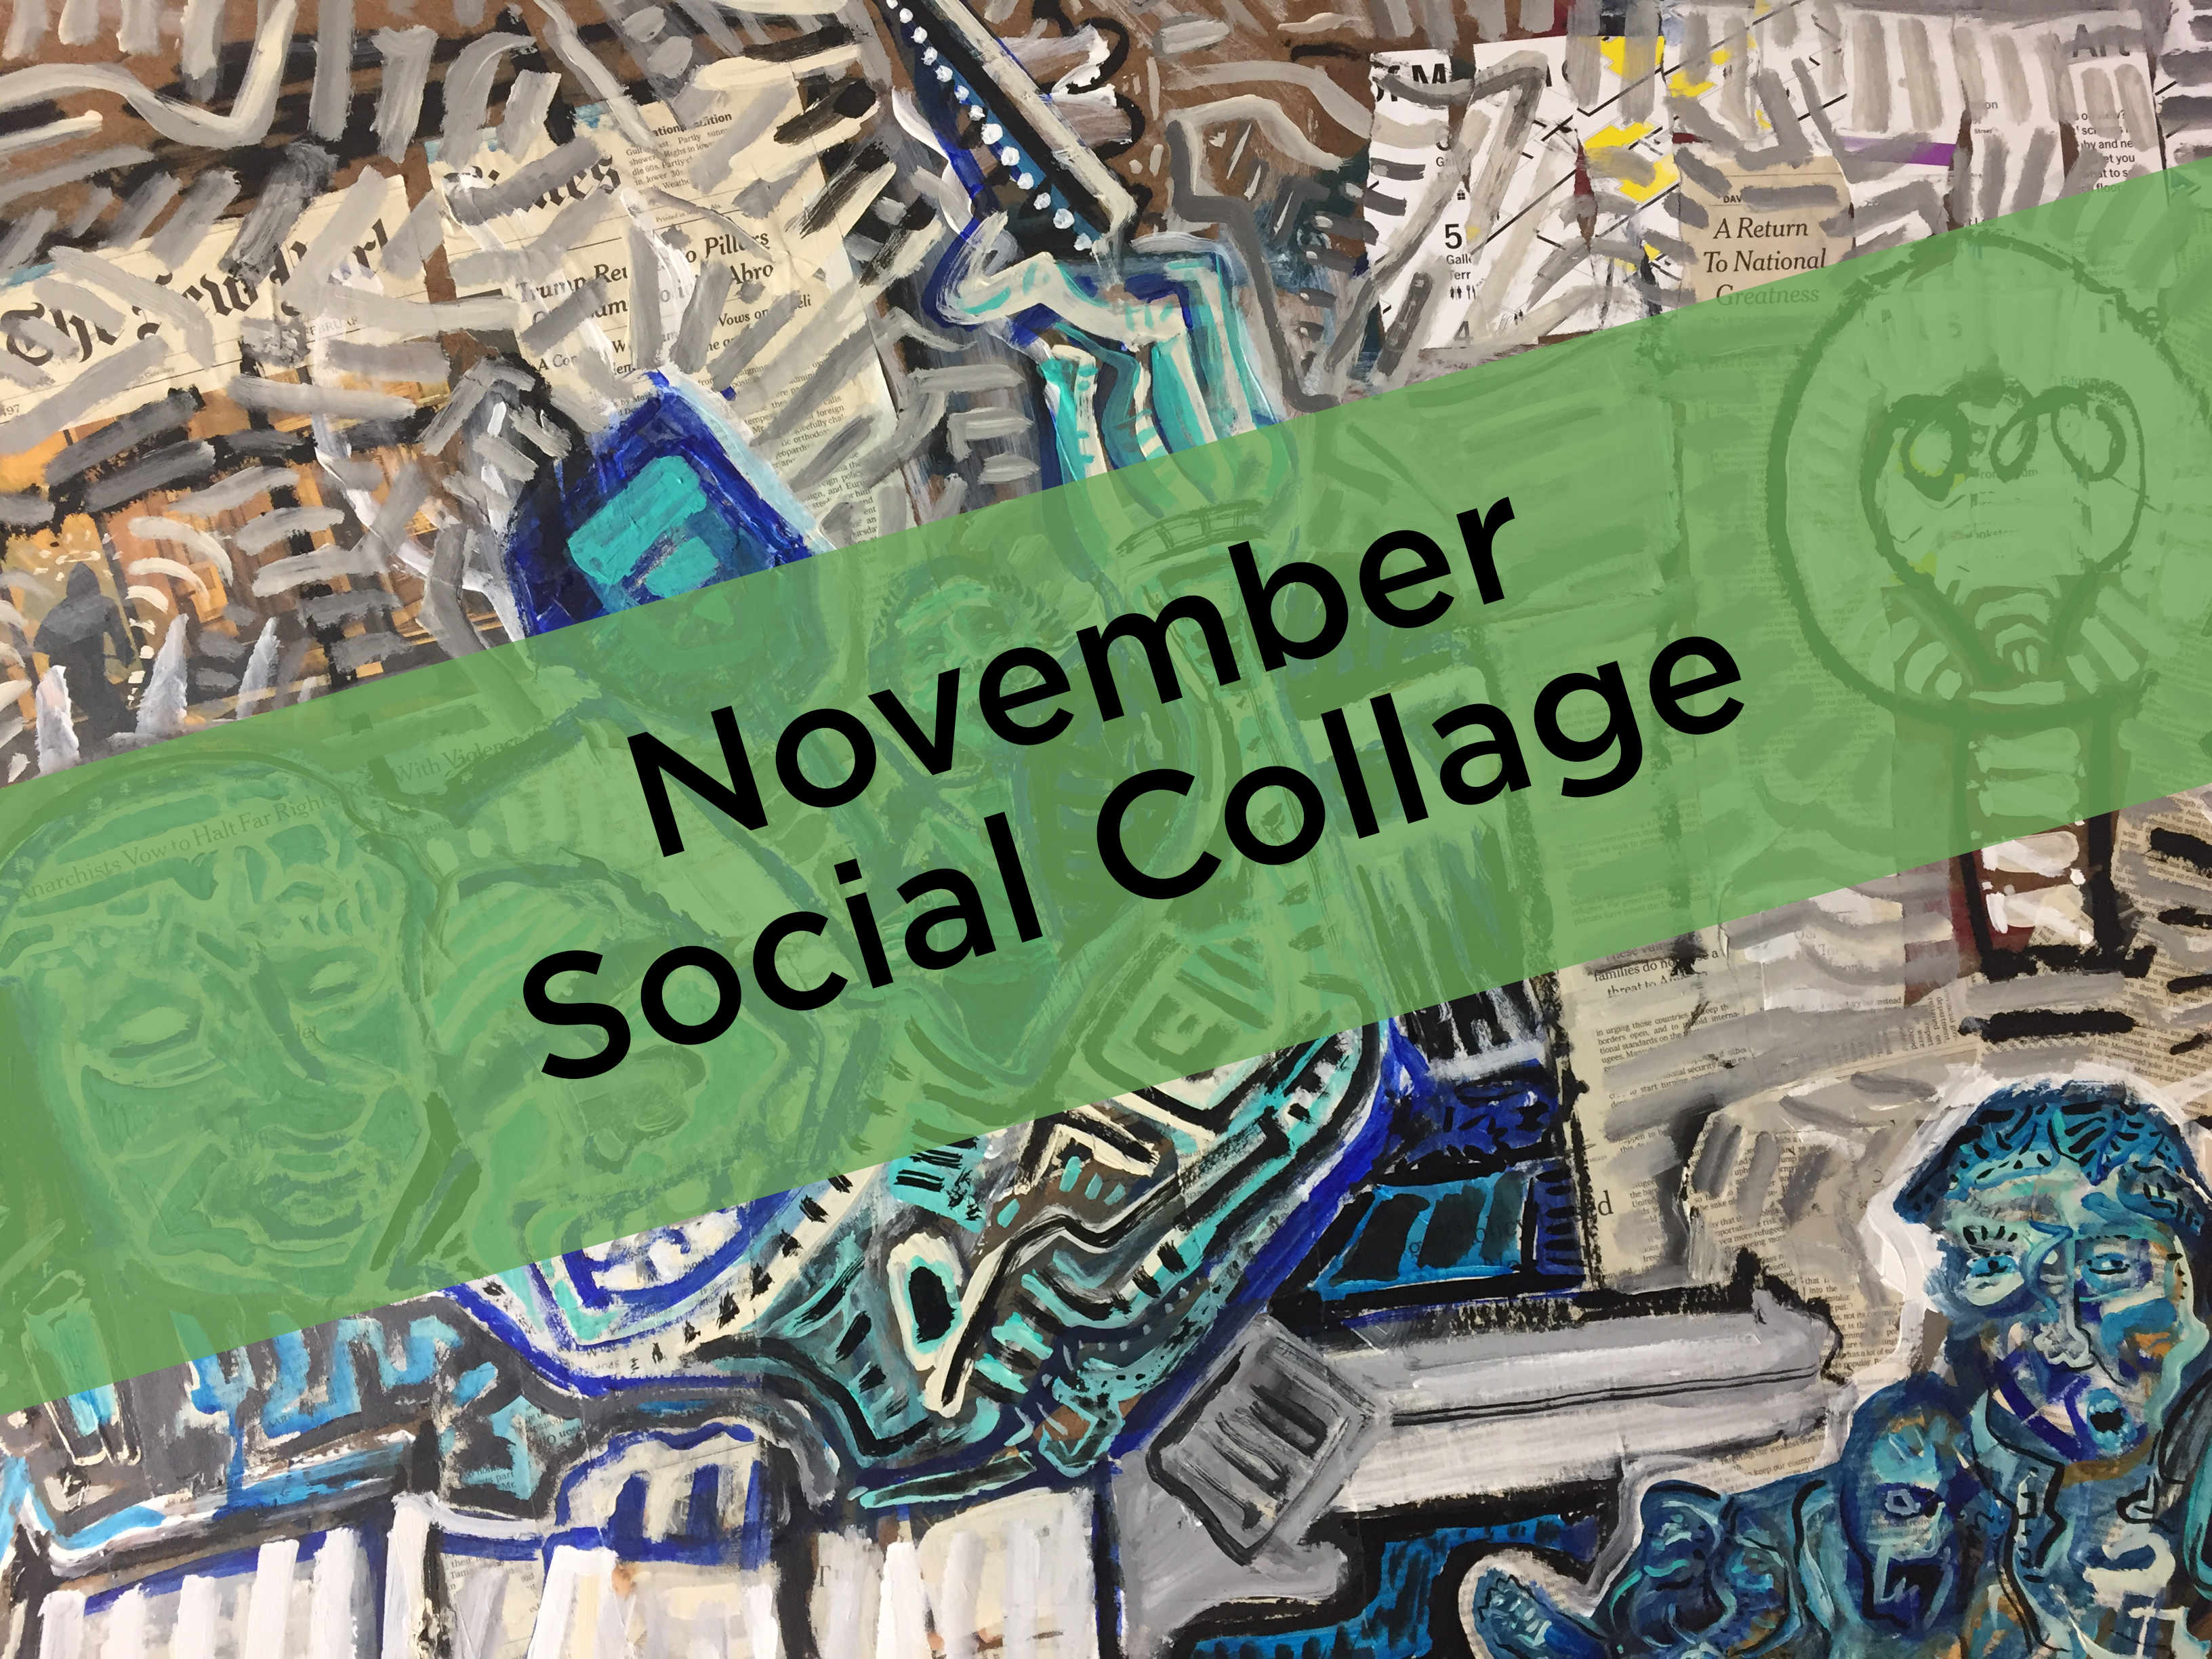 Nov. Social Collage